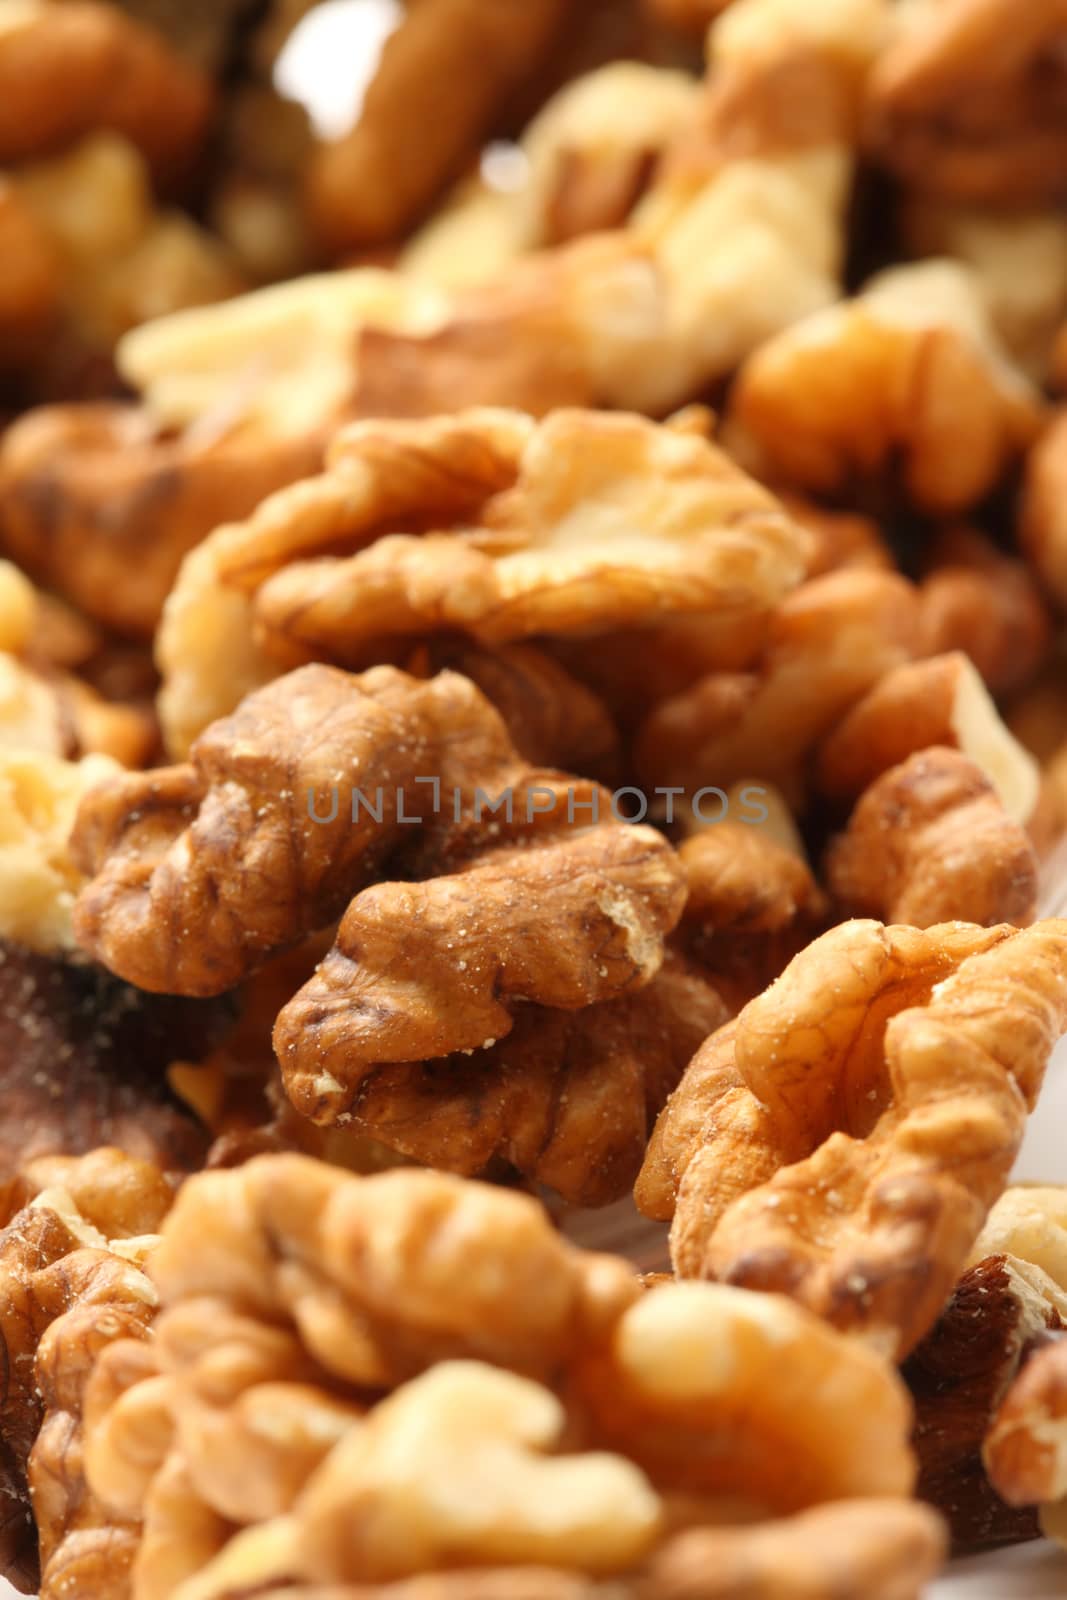 Heap of walnuts by Garsya